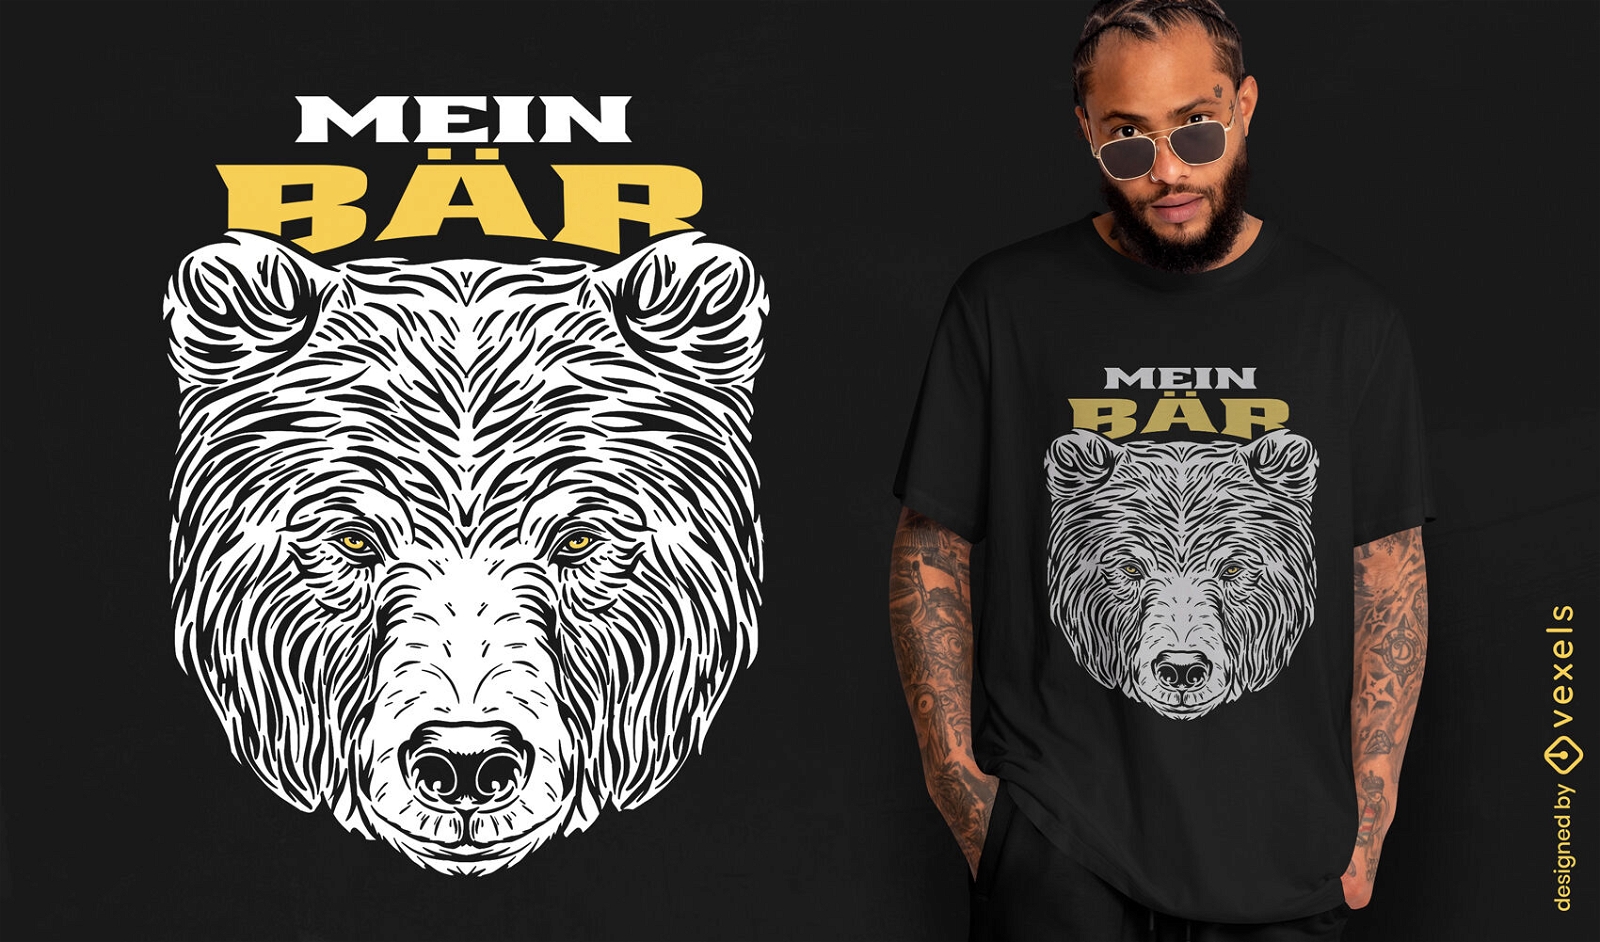 Bear german quote t-shirt design